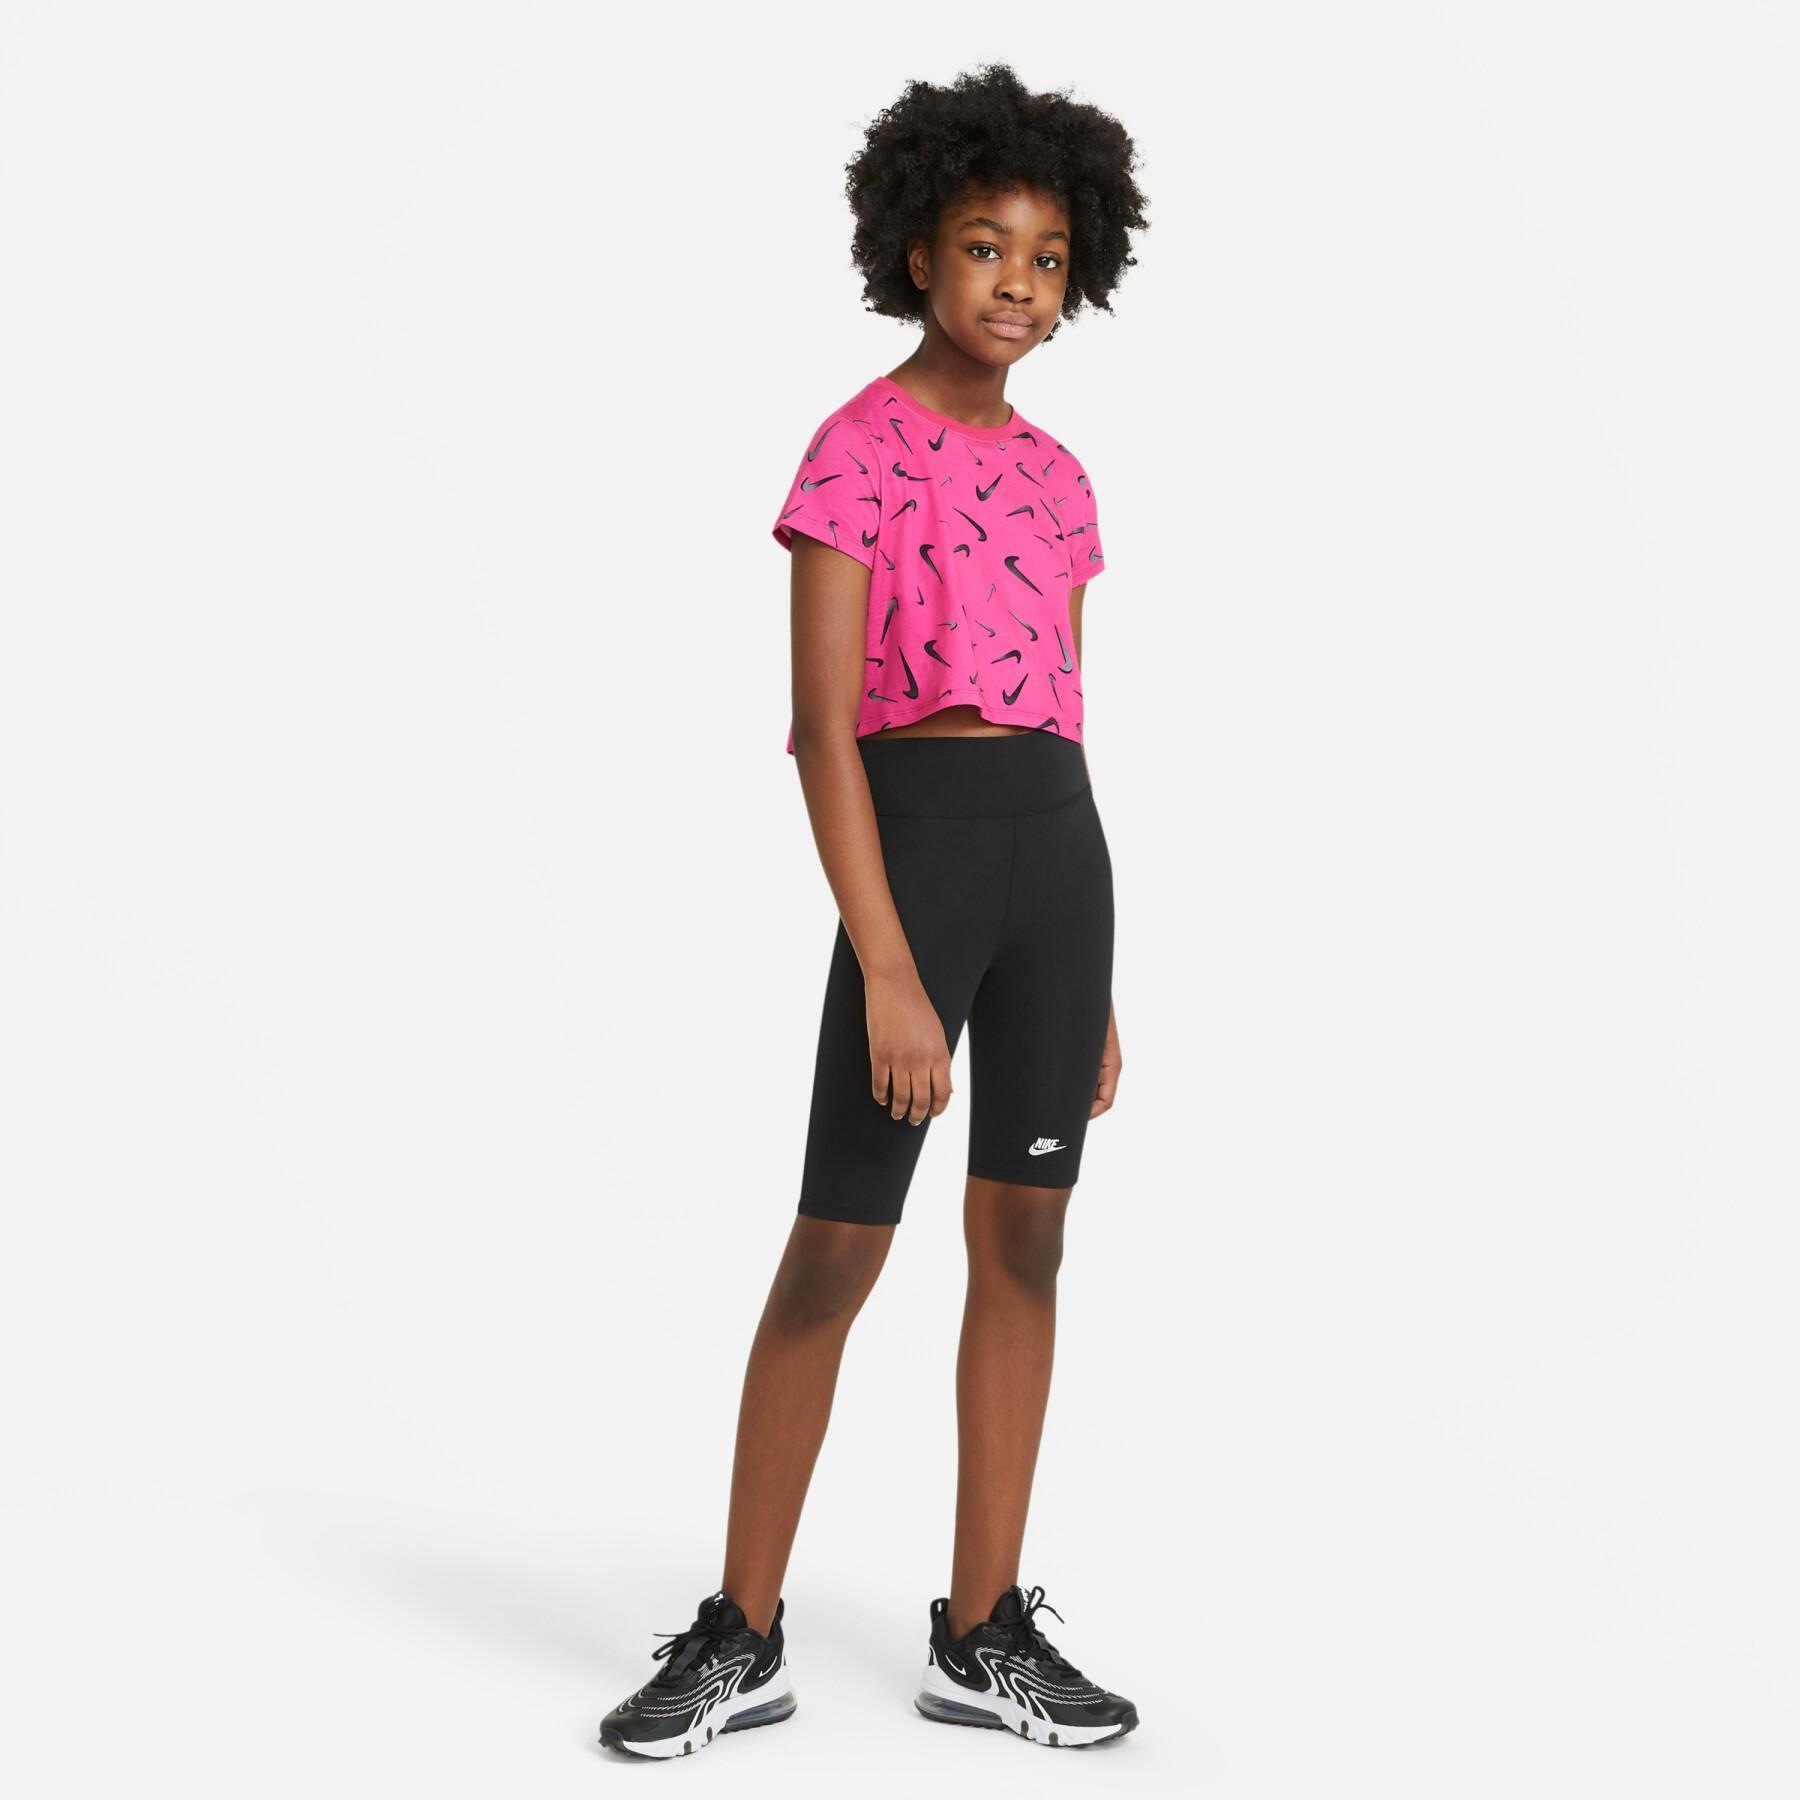 Calções de menina Nike Sportswear